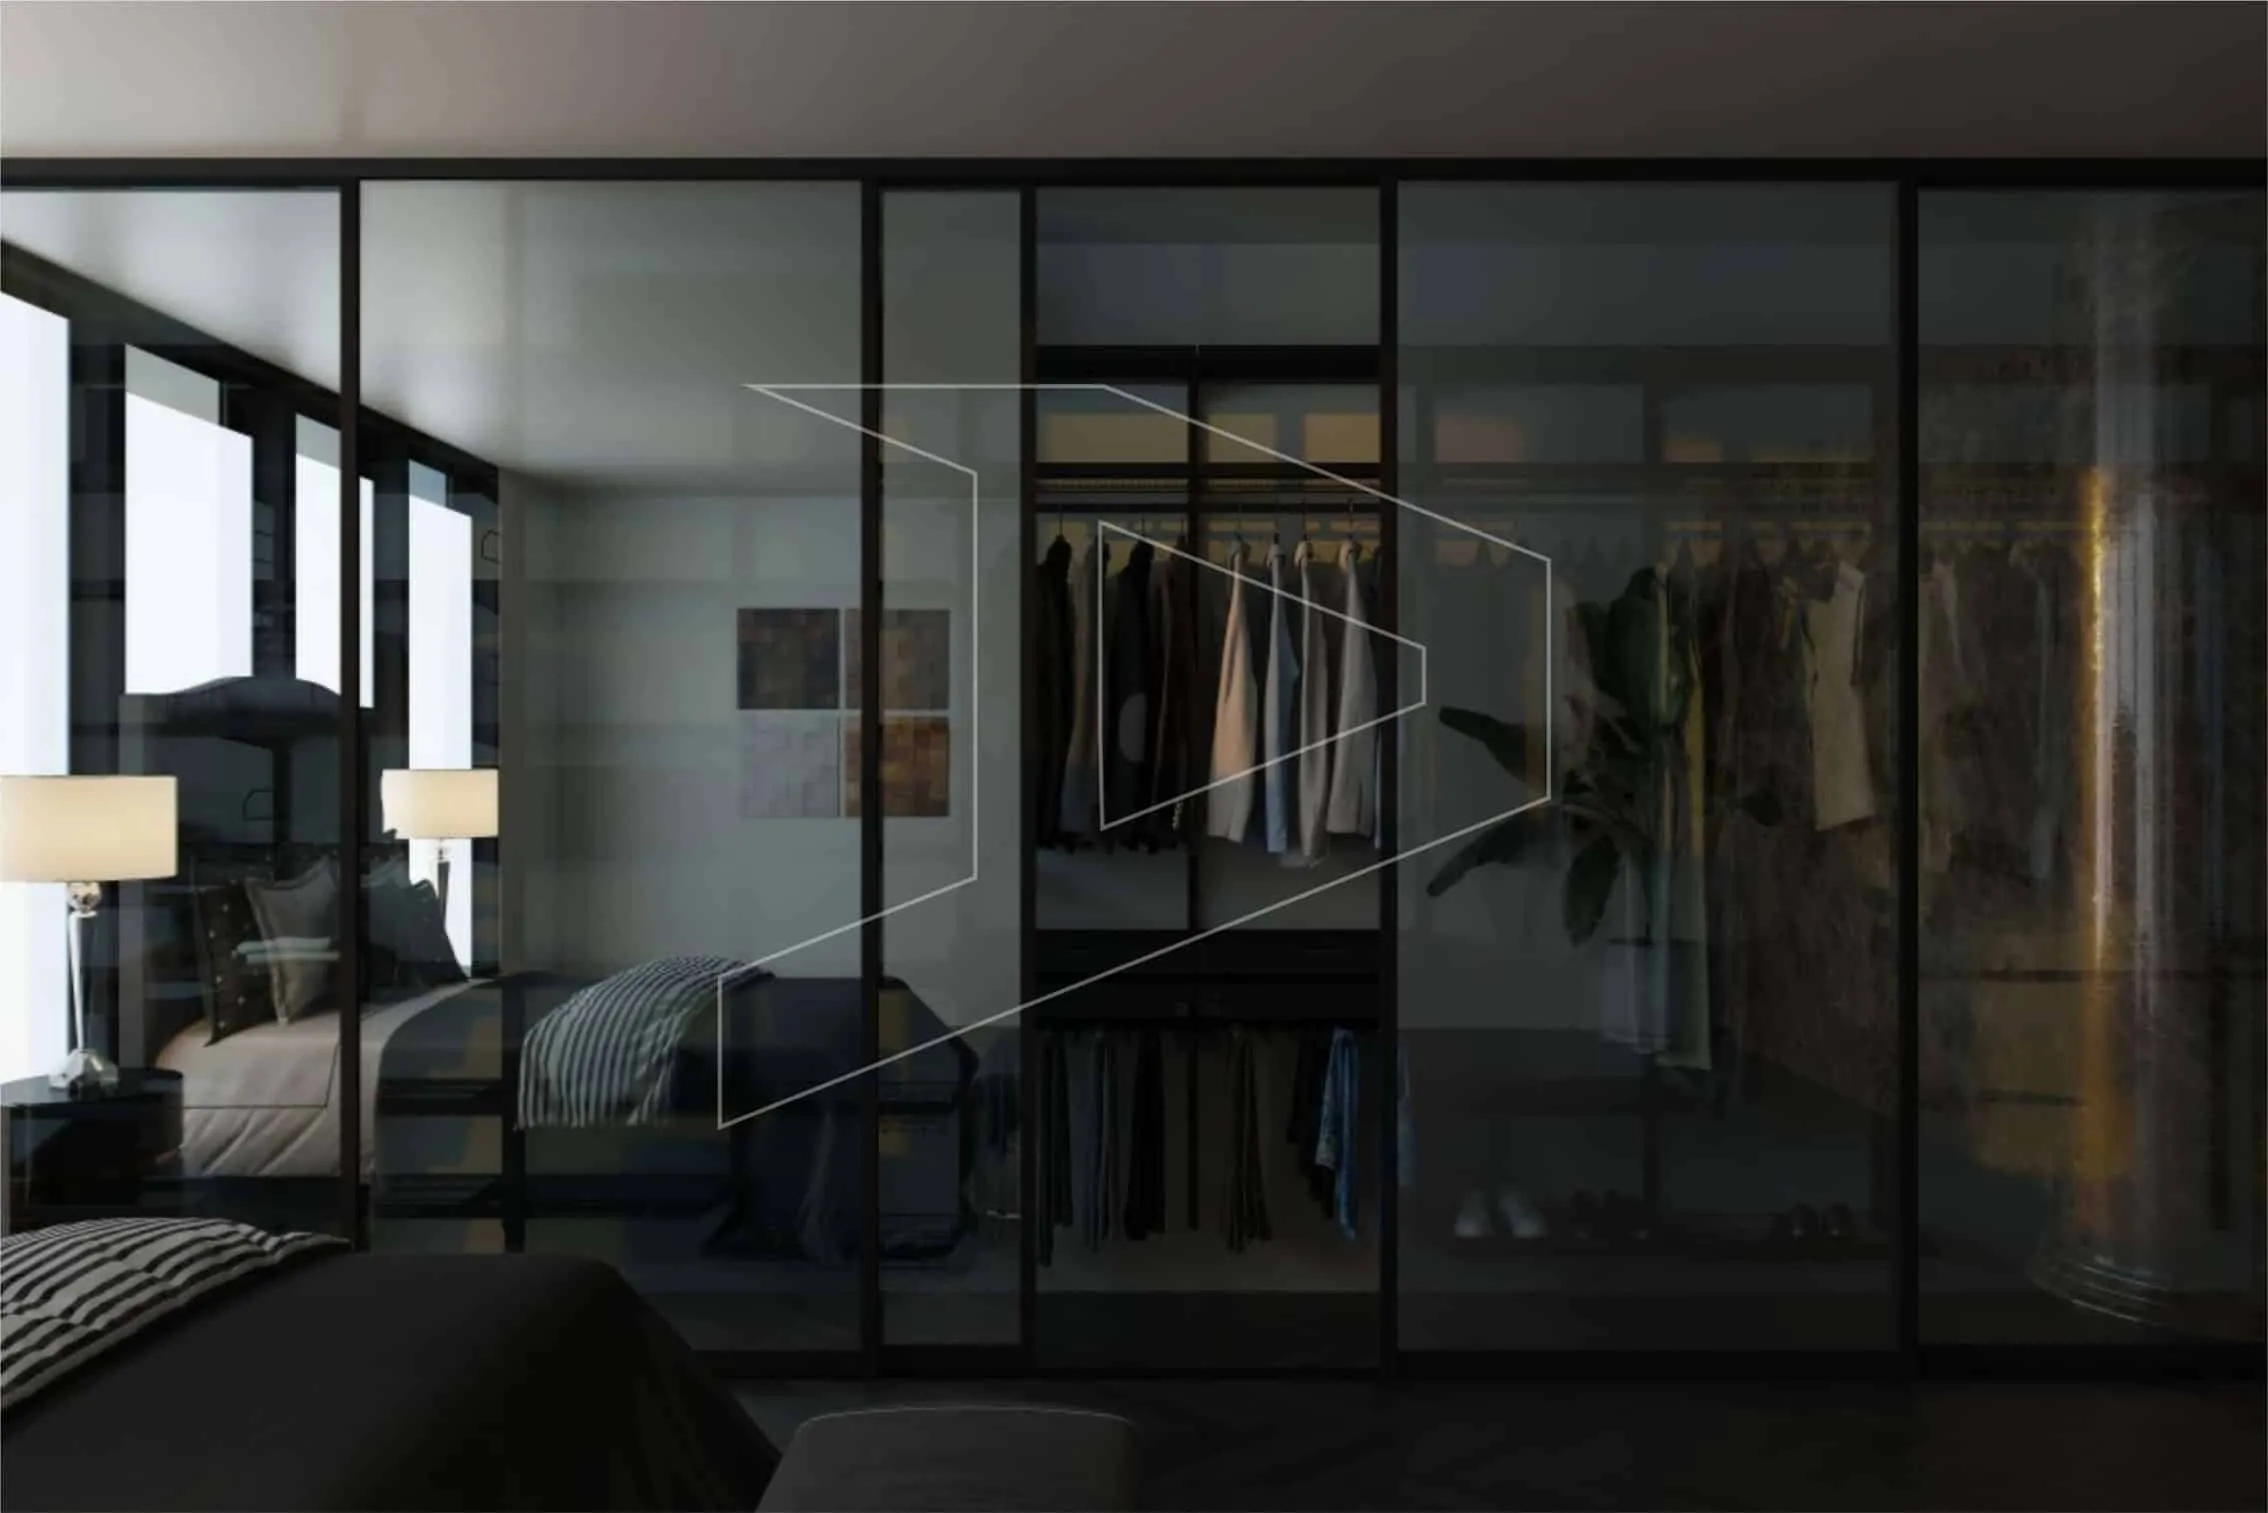 Aristo walk in wardrobe closet with sliding doors & pole based shelves